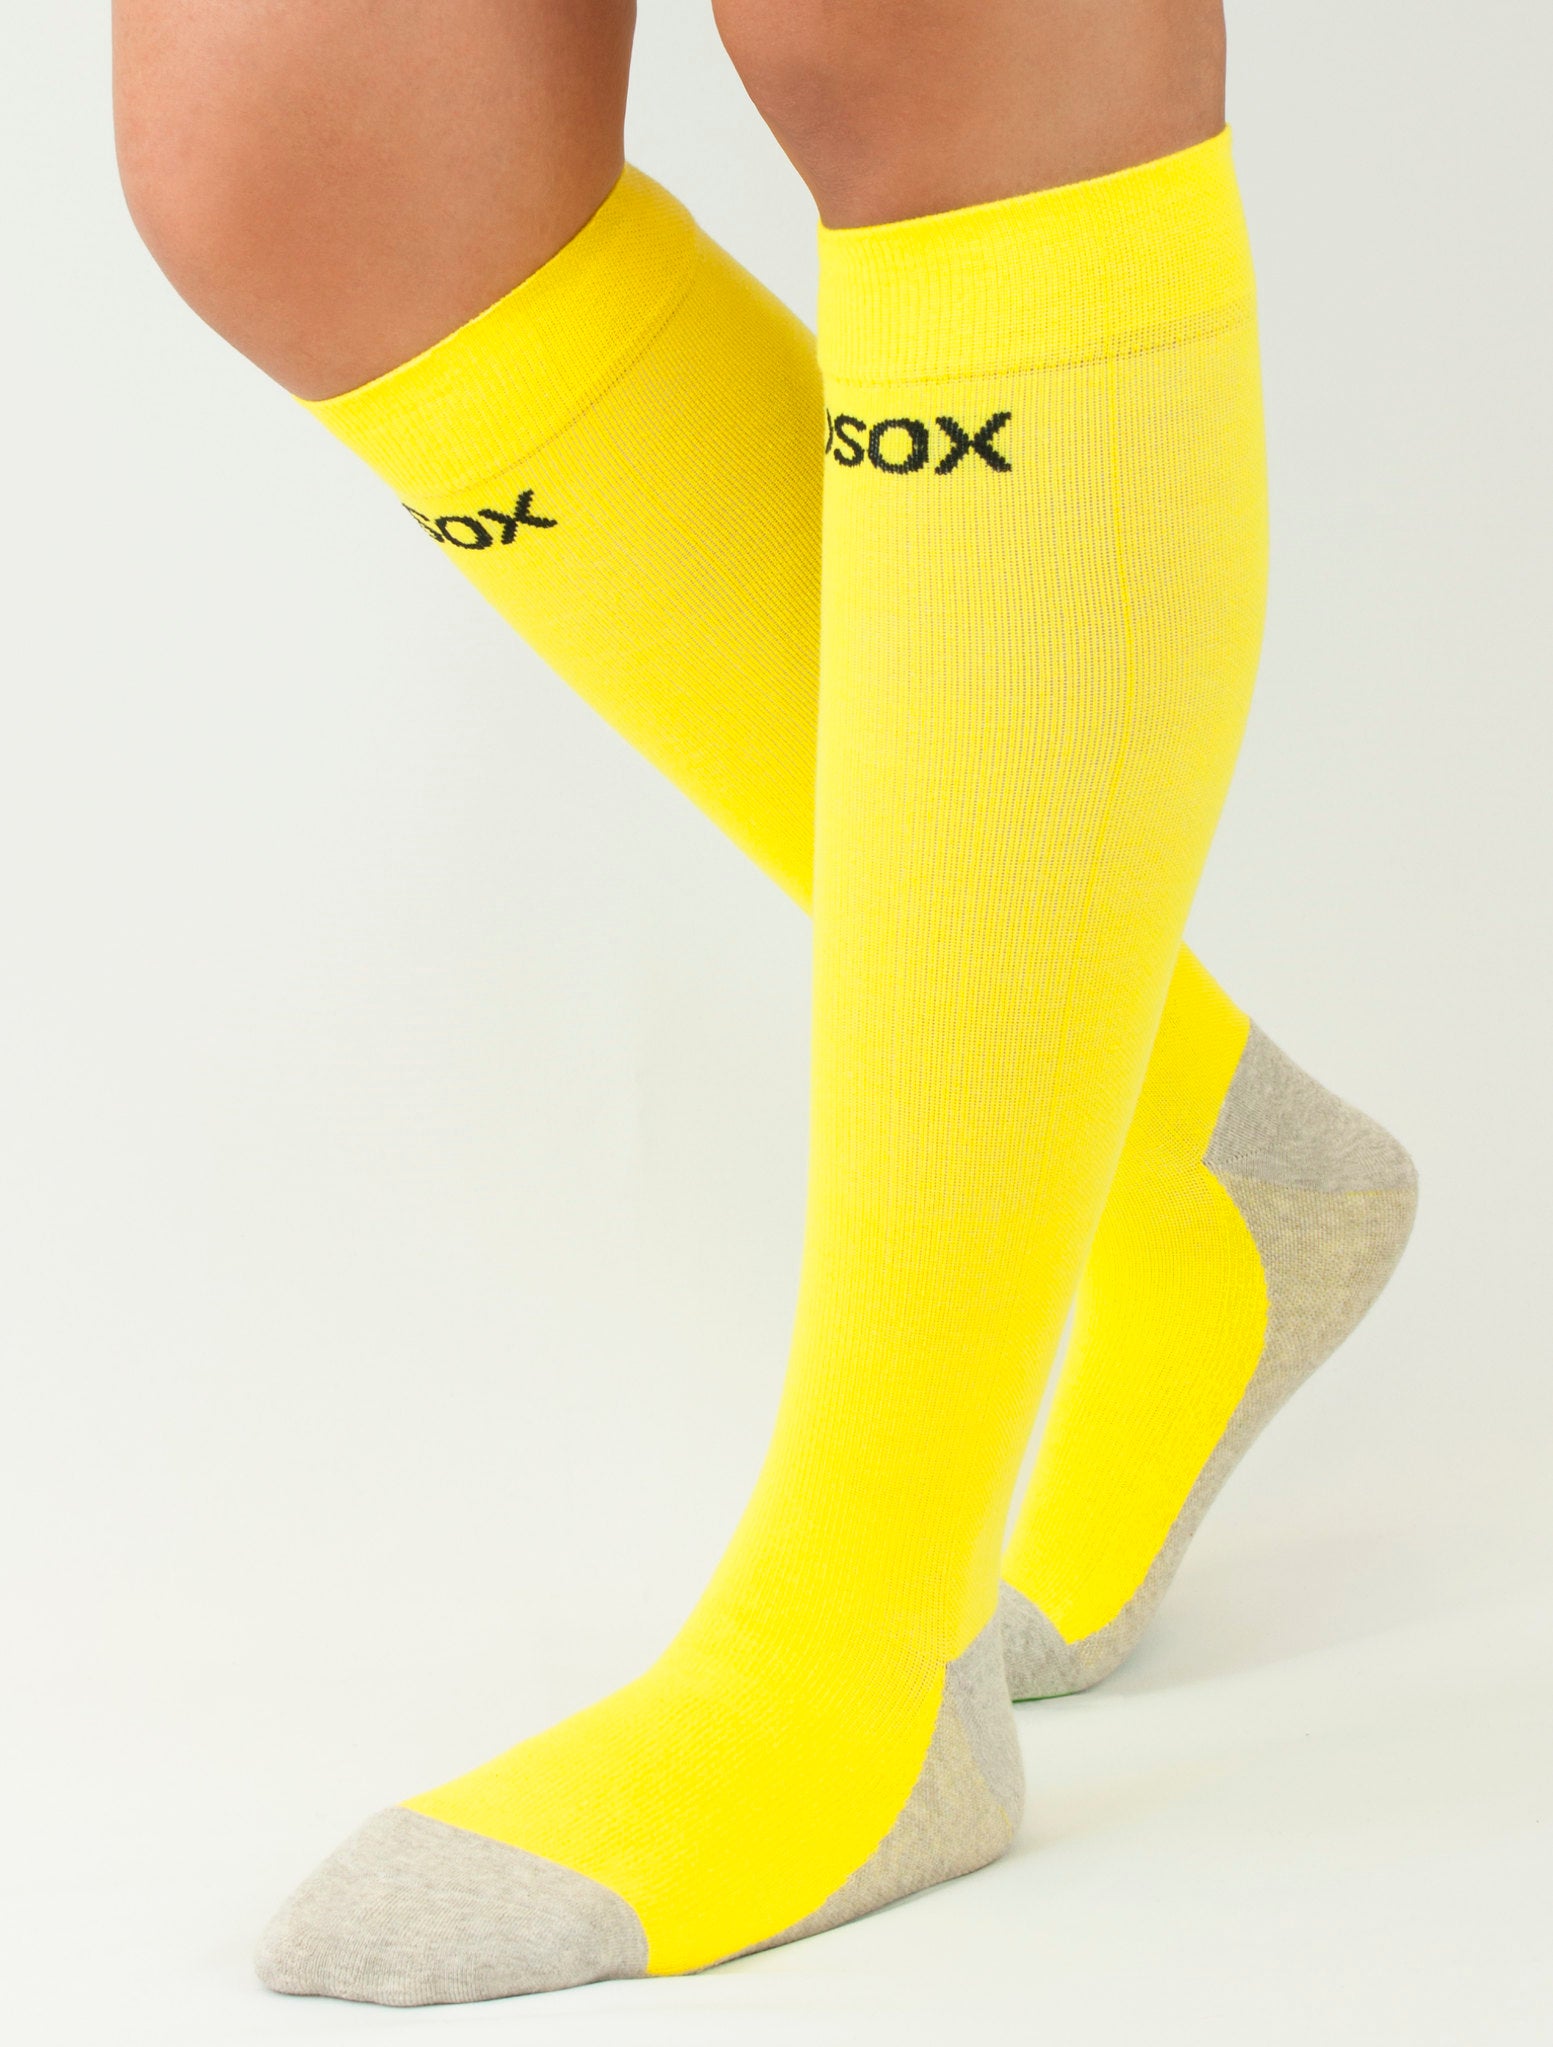 MDSOX 20-30mmHg Yellow